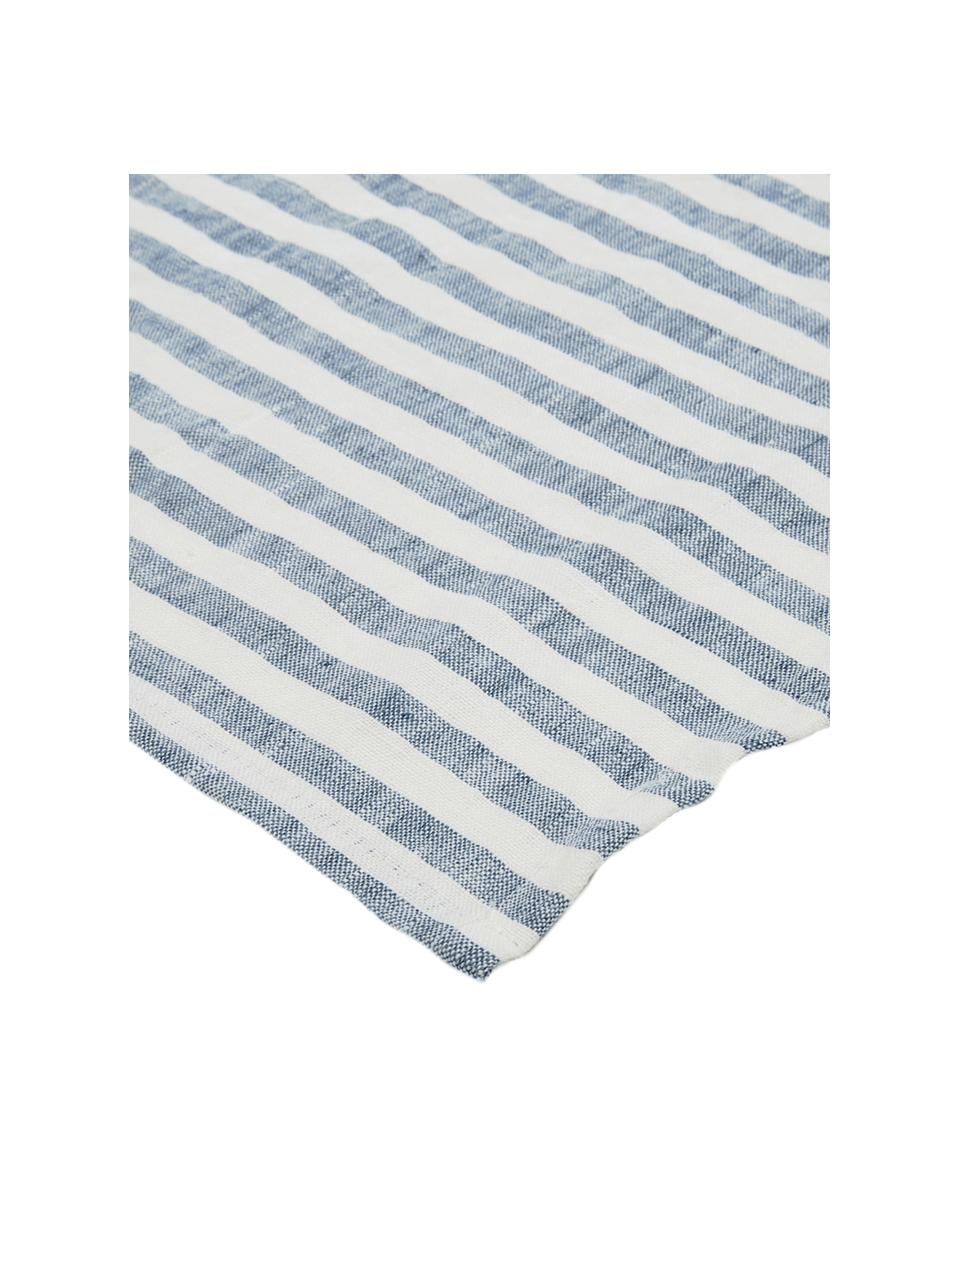 Mantel de lino Solami, Lino, Azul claro, blanco, De 6 a 8 comensales (An 150 x L 250 cm)